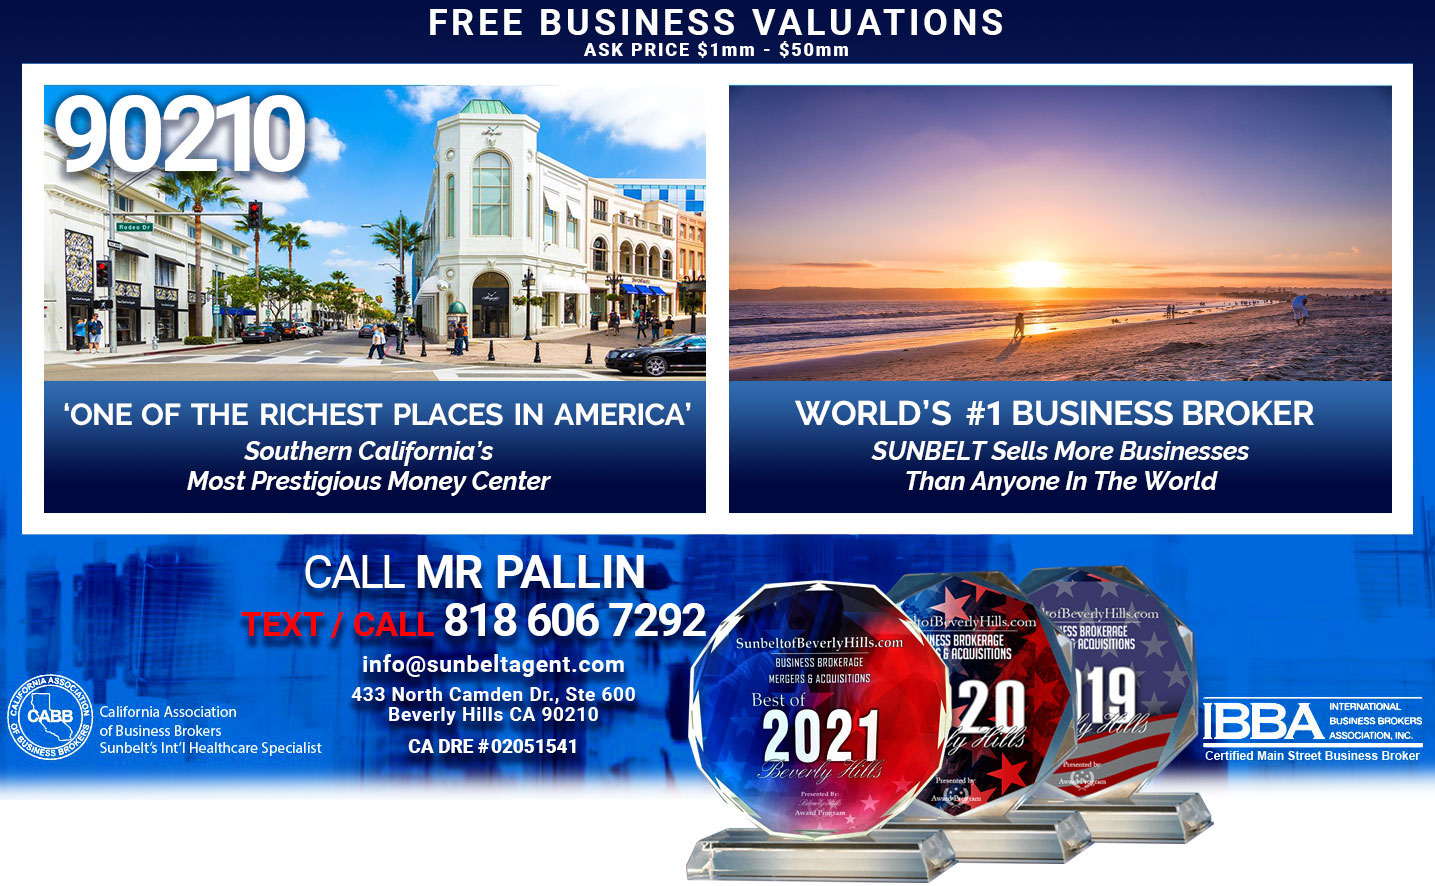 Sunbelt Business Brokers California | Business Brokerage Services